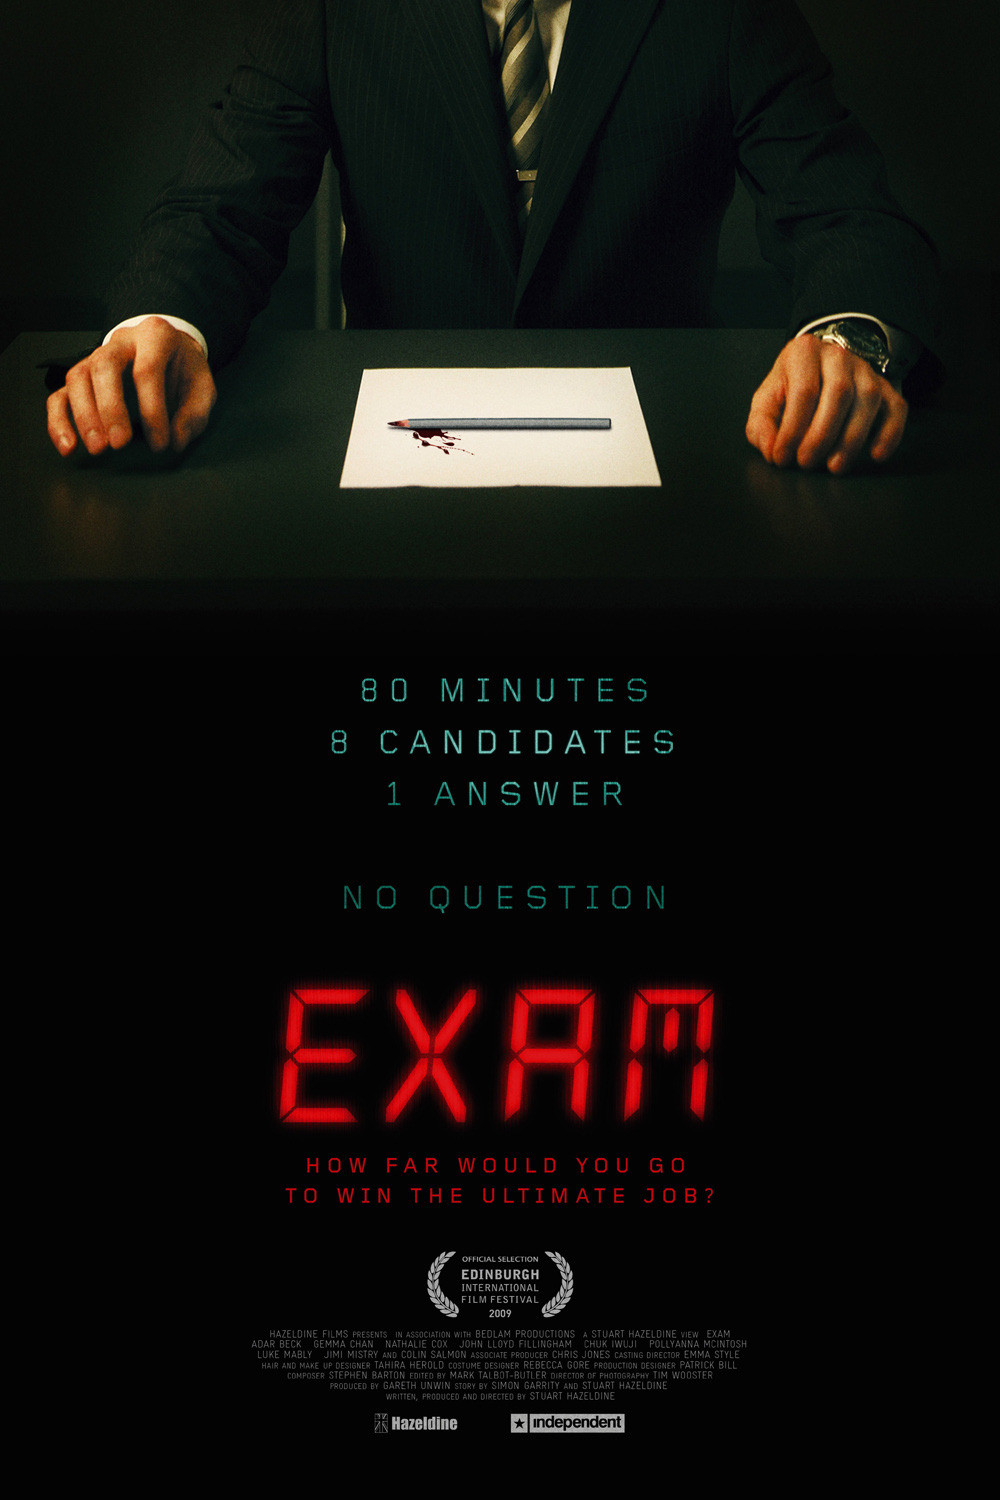 The Exam movie